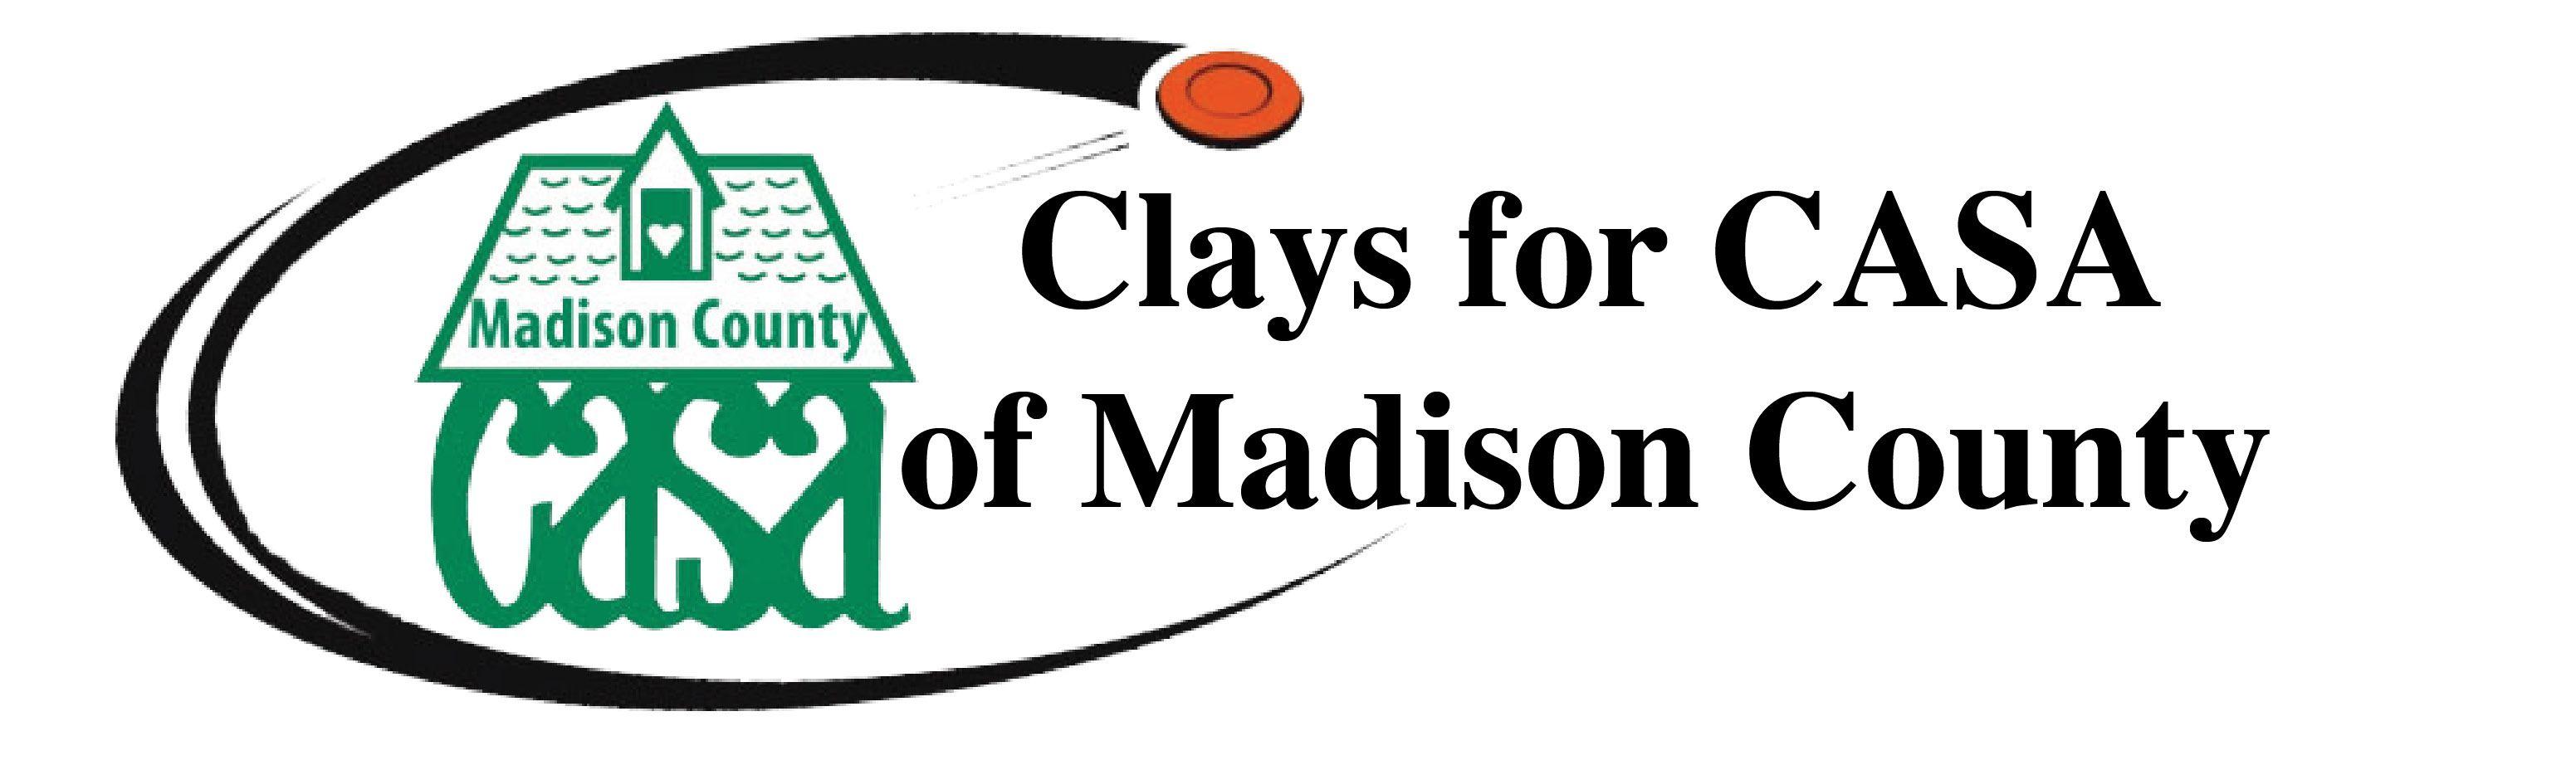 Casa Logo - Clays for CASA